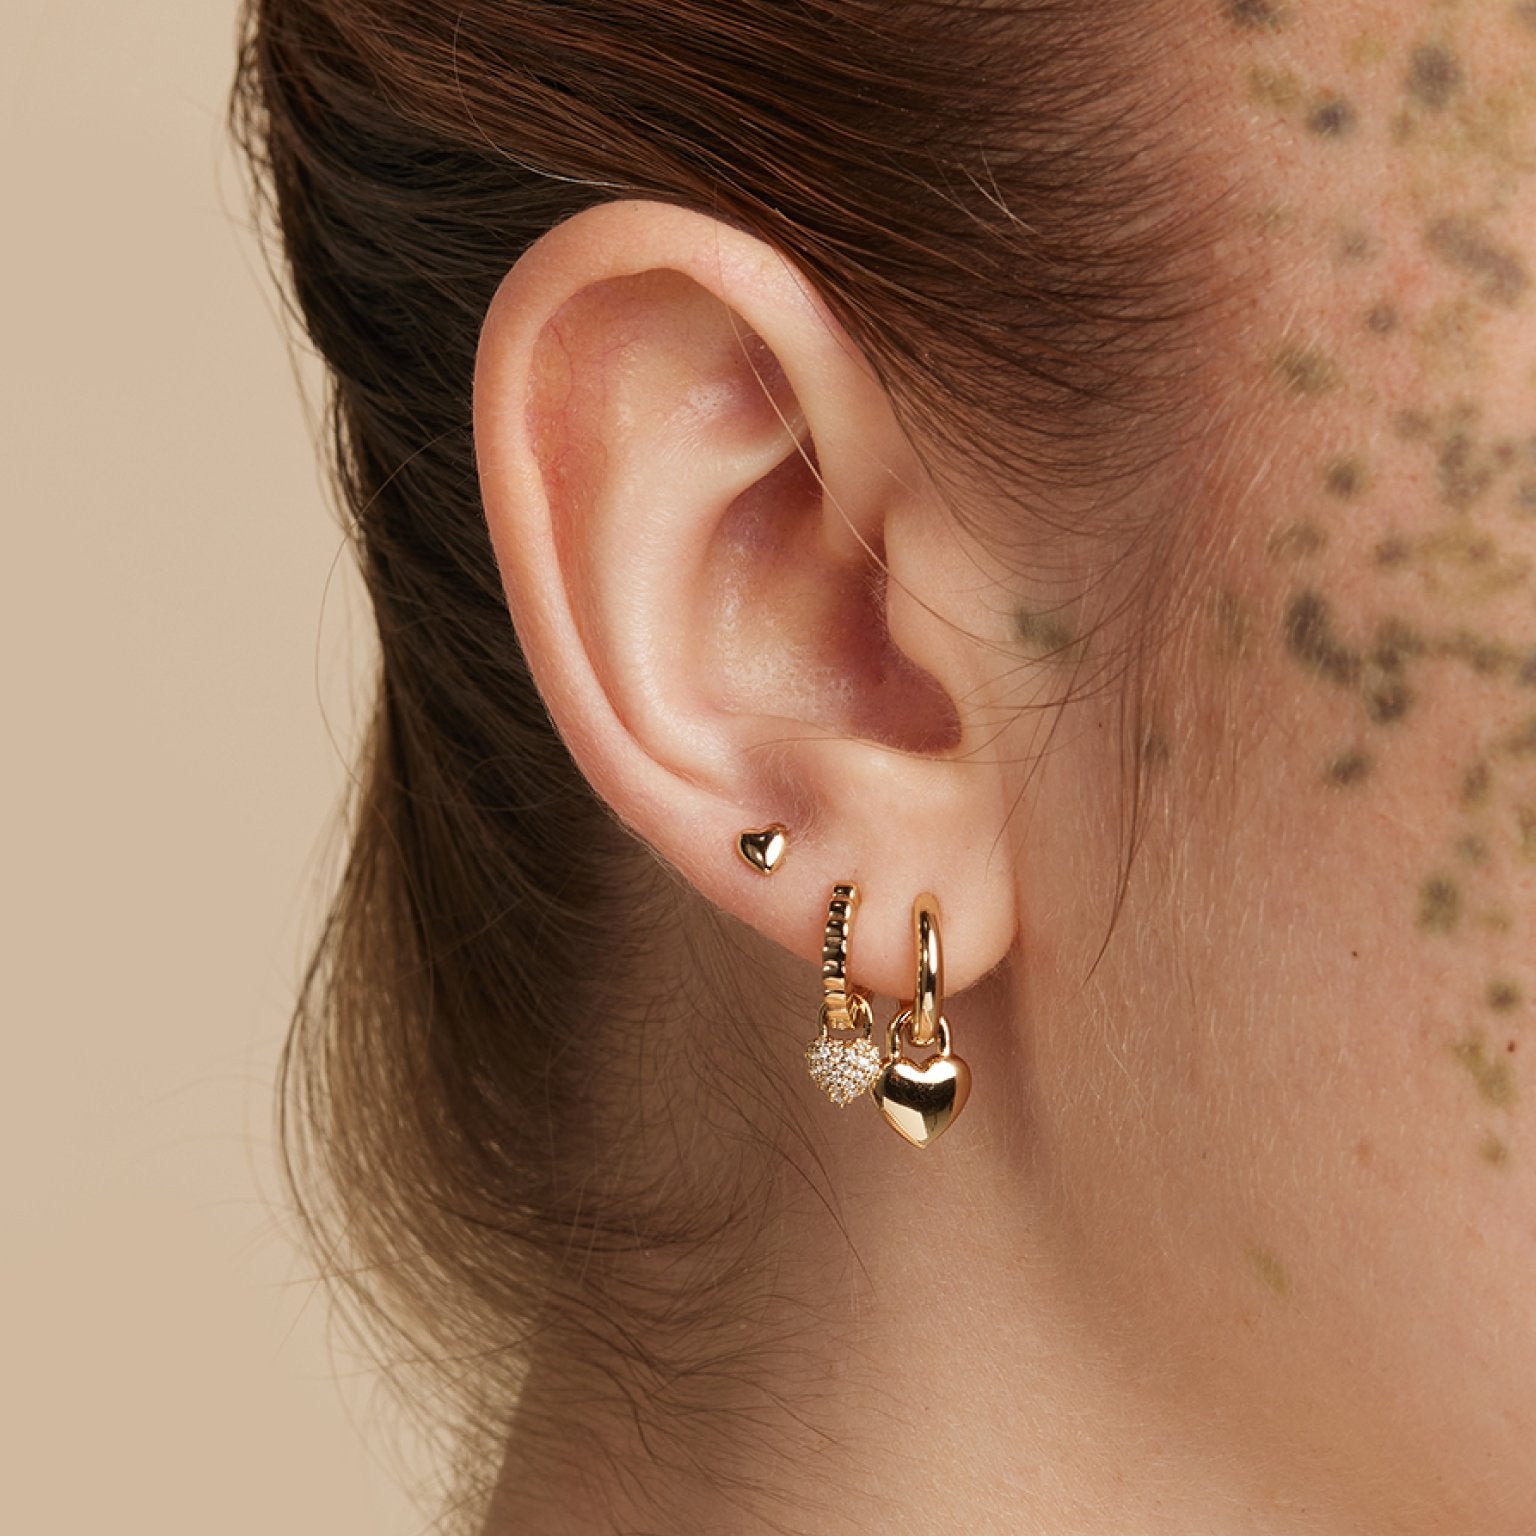 Lobe Piercing Jewellery, 14ct Solid Gold